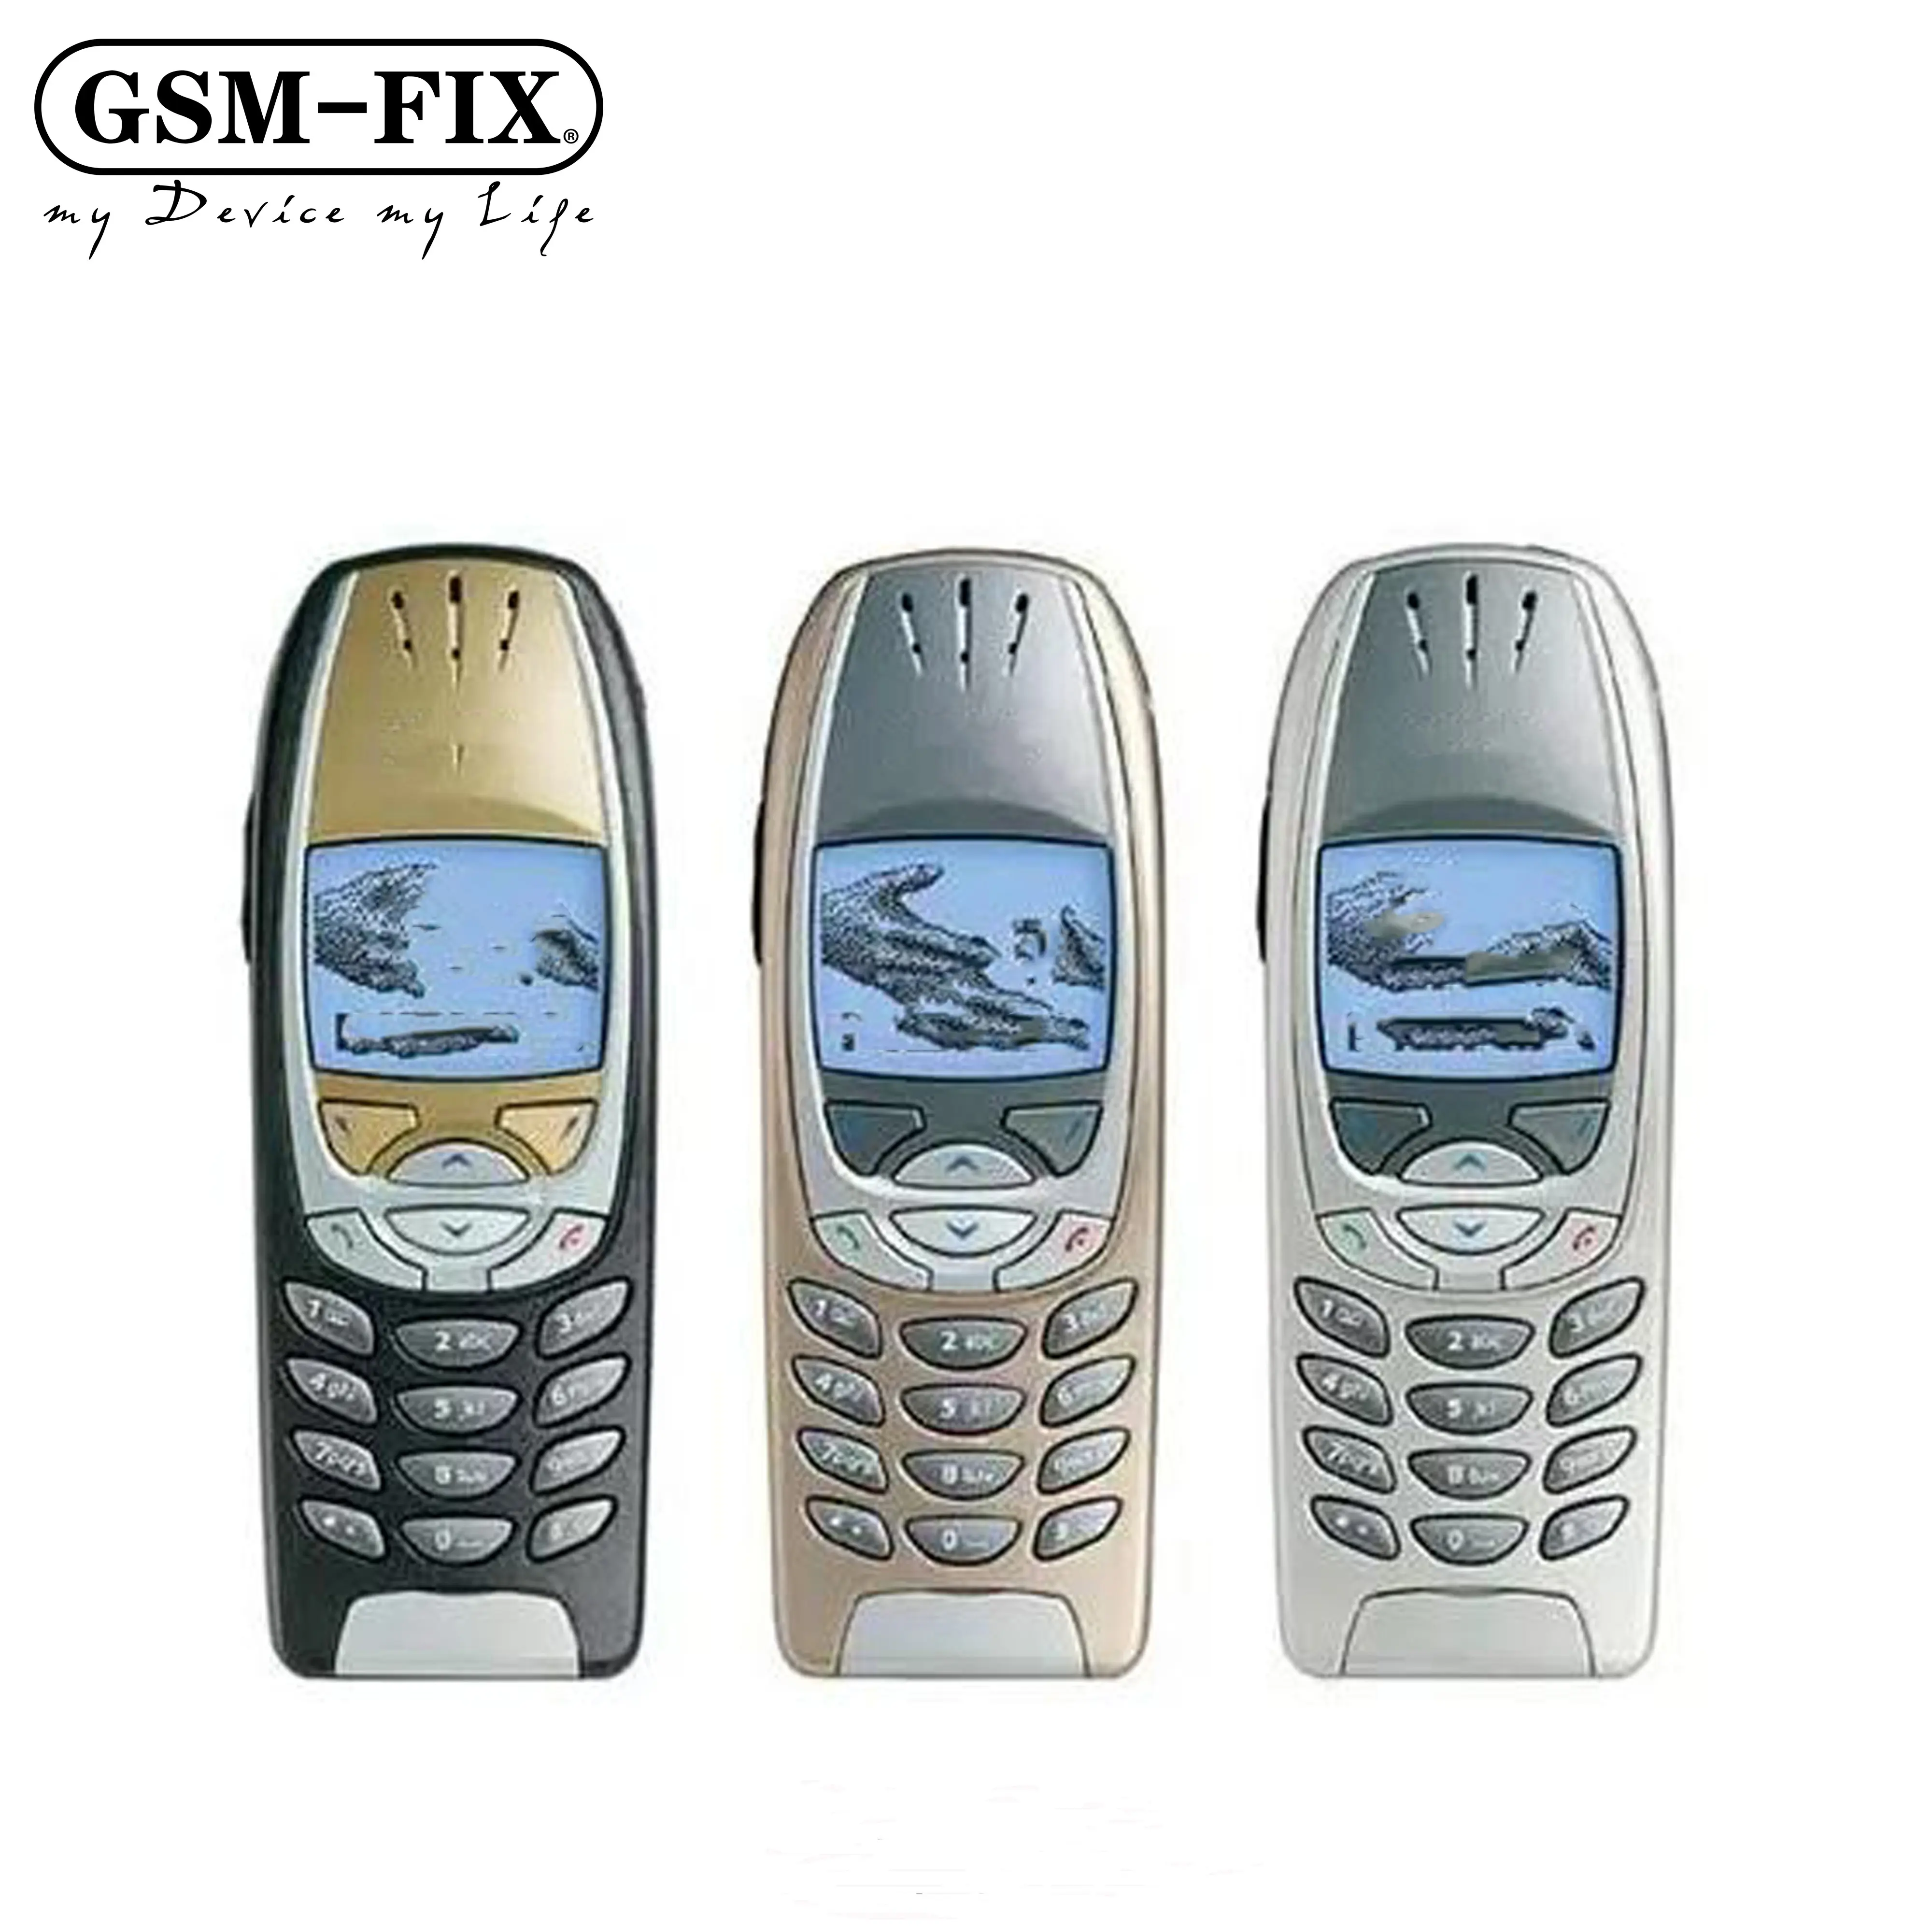 GSM-FIX 노키아 6310i 잠금 해제 원래 슈퍼 저렴한 GSM 바 잠금 해제 GSM 바 모바일 휴대 전화